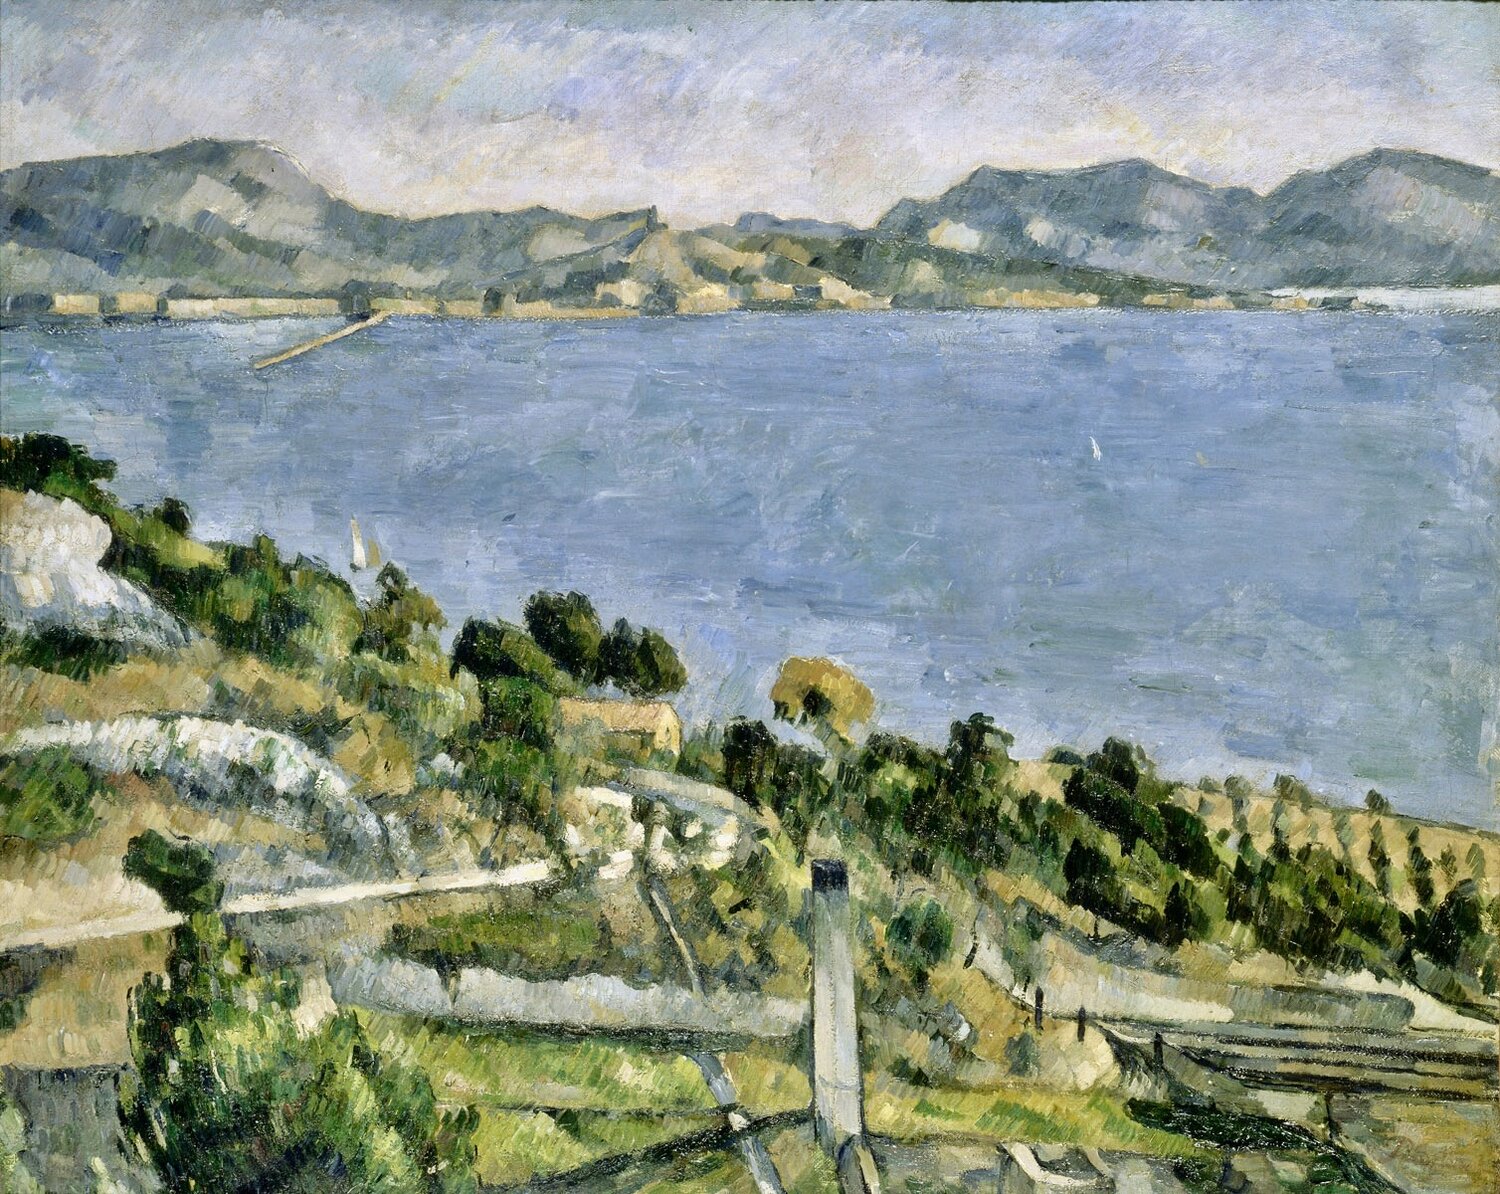 The original Cézanne.